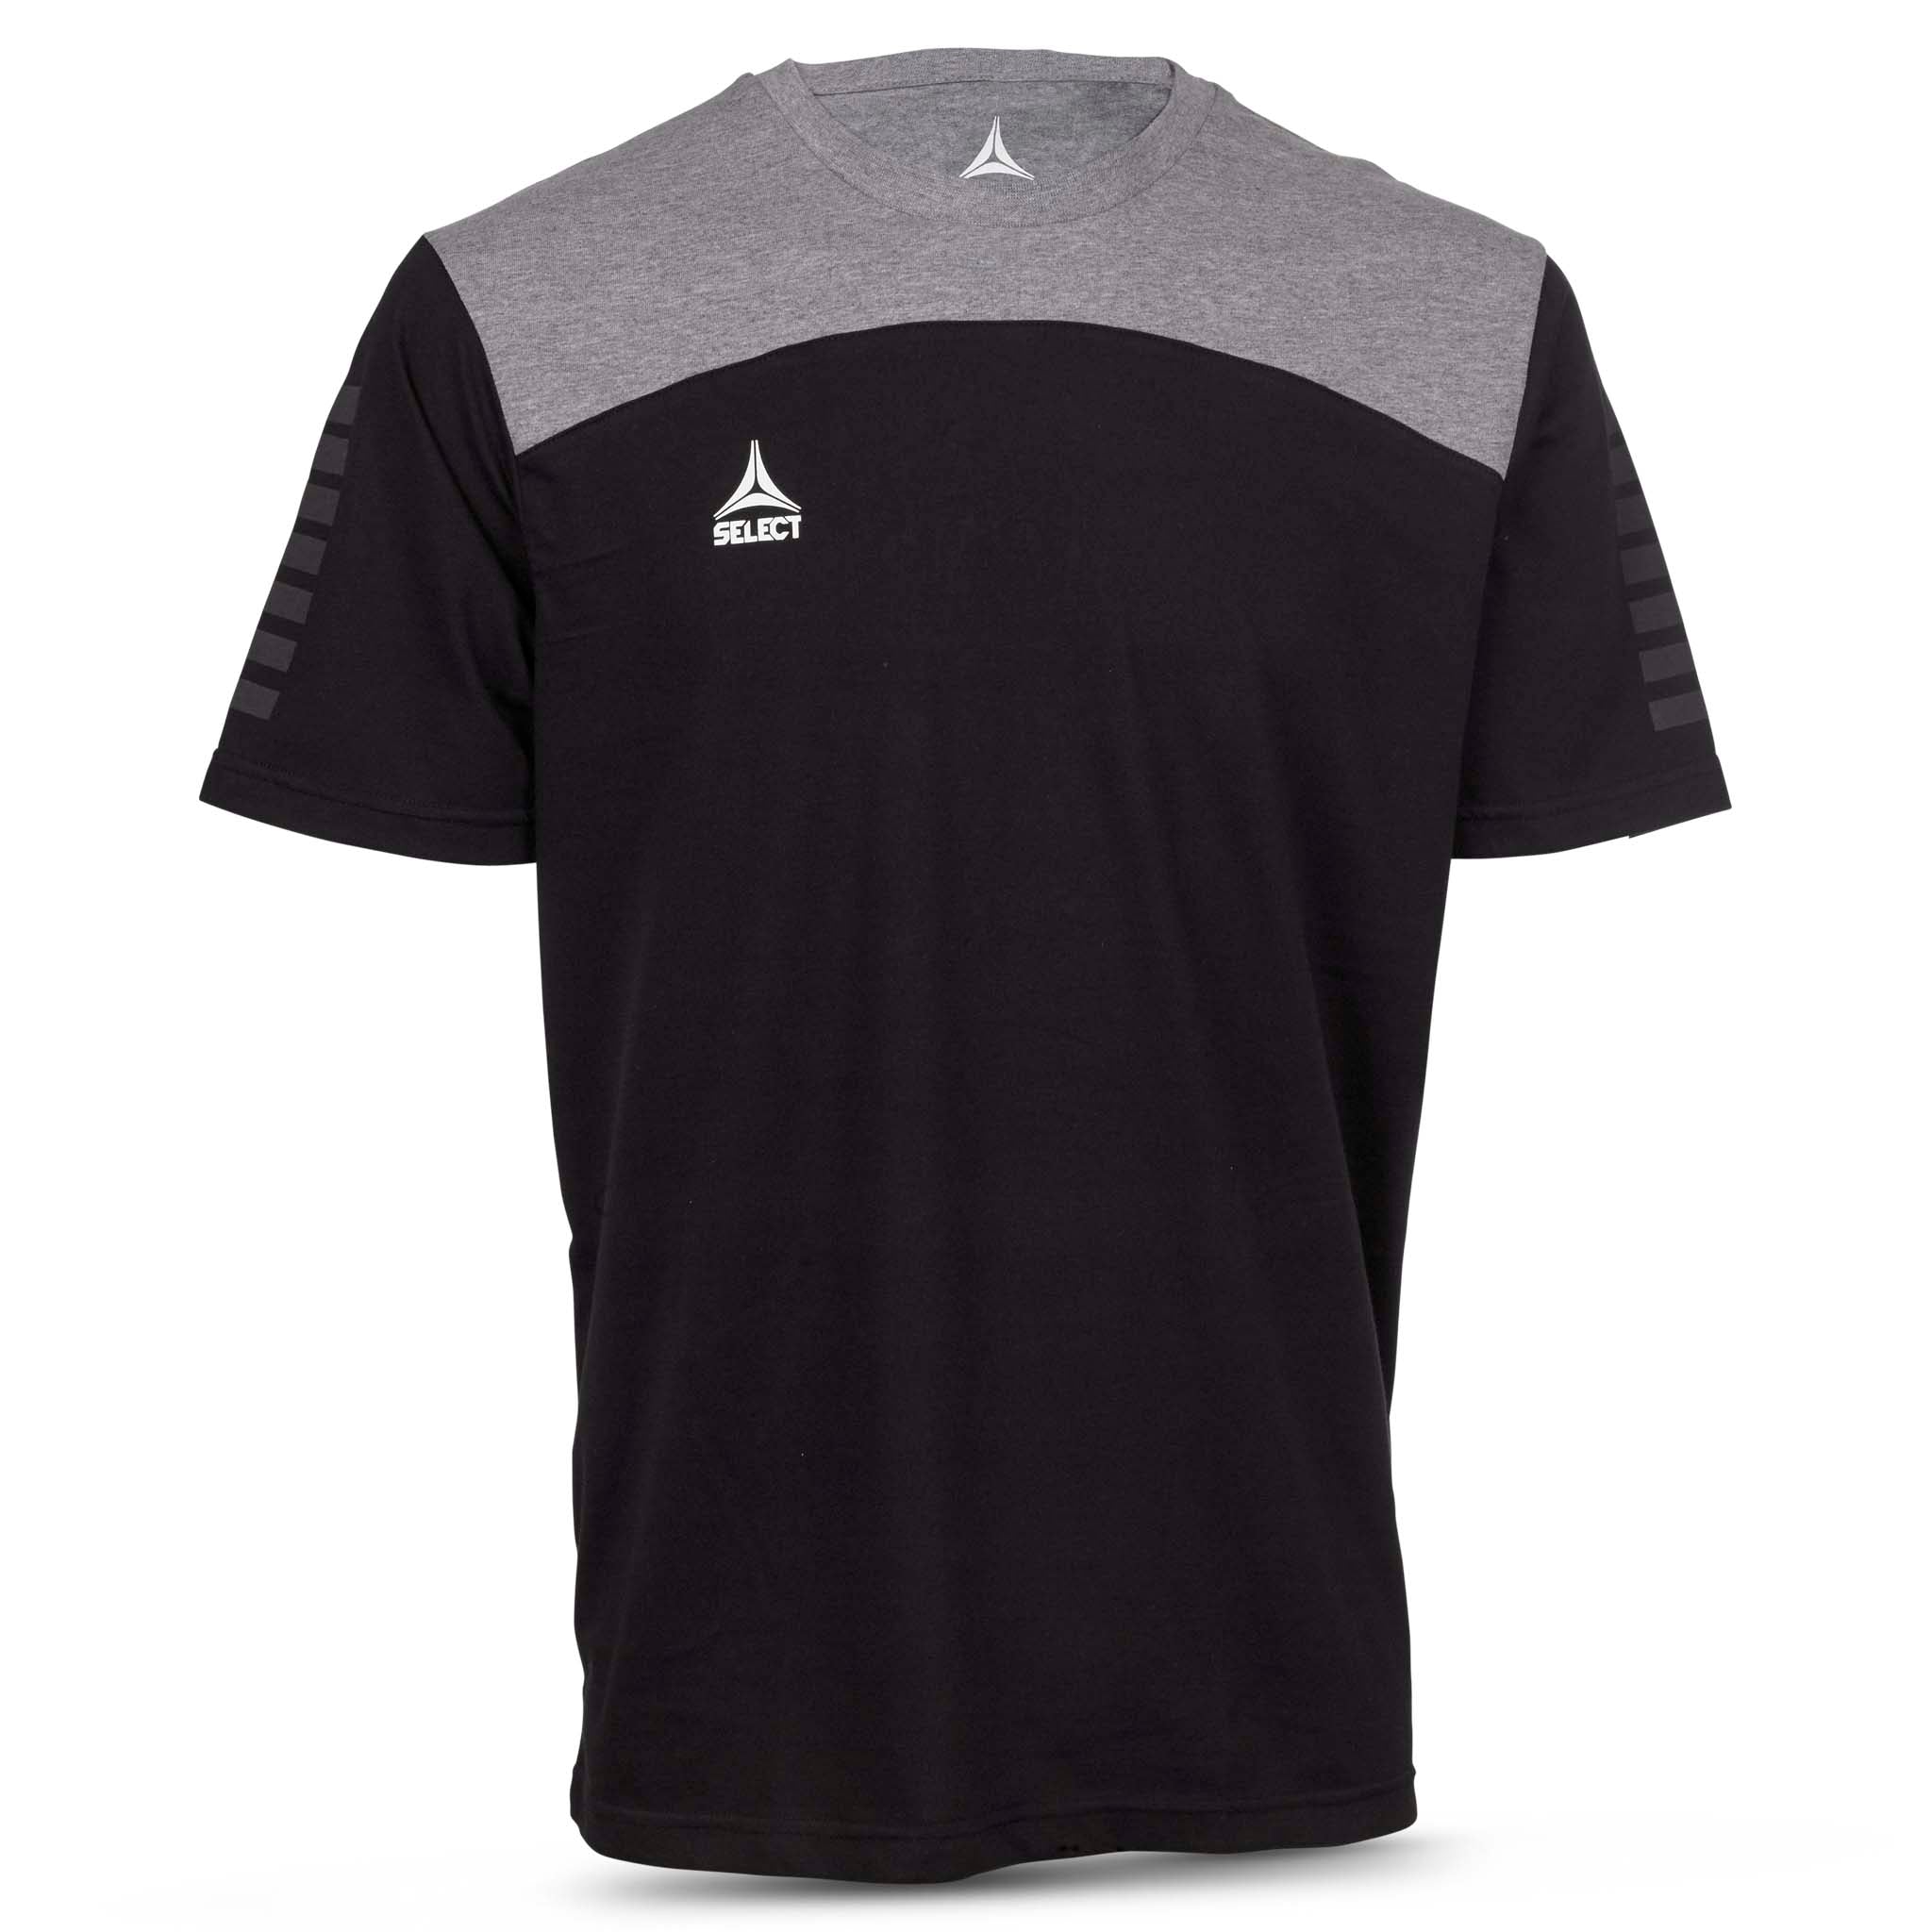 Oxford T-shirt #färg_svart/grå